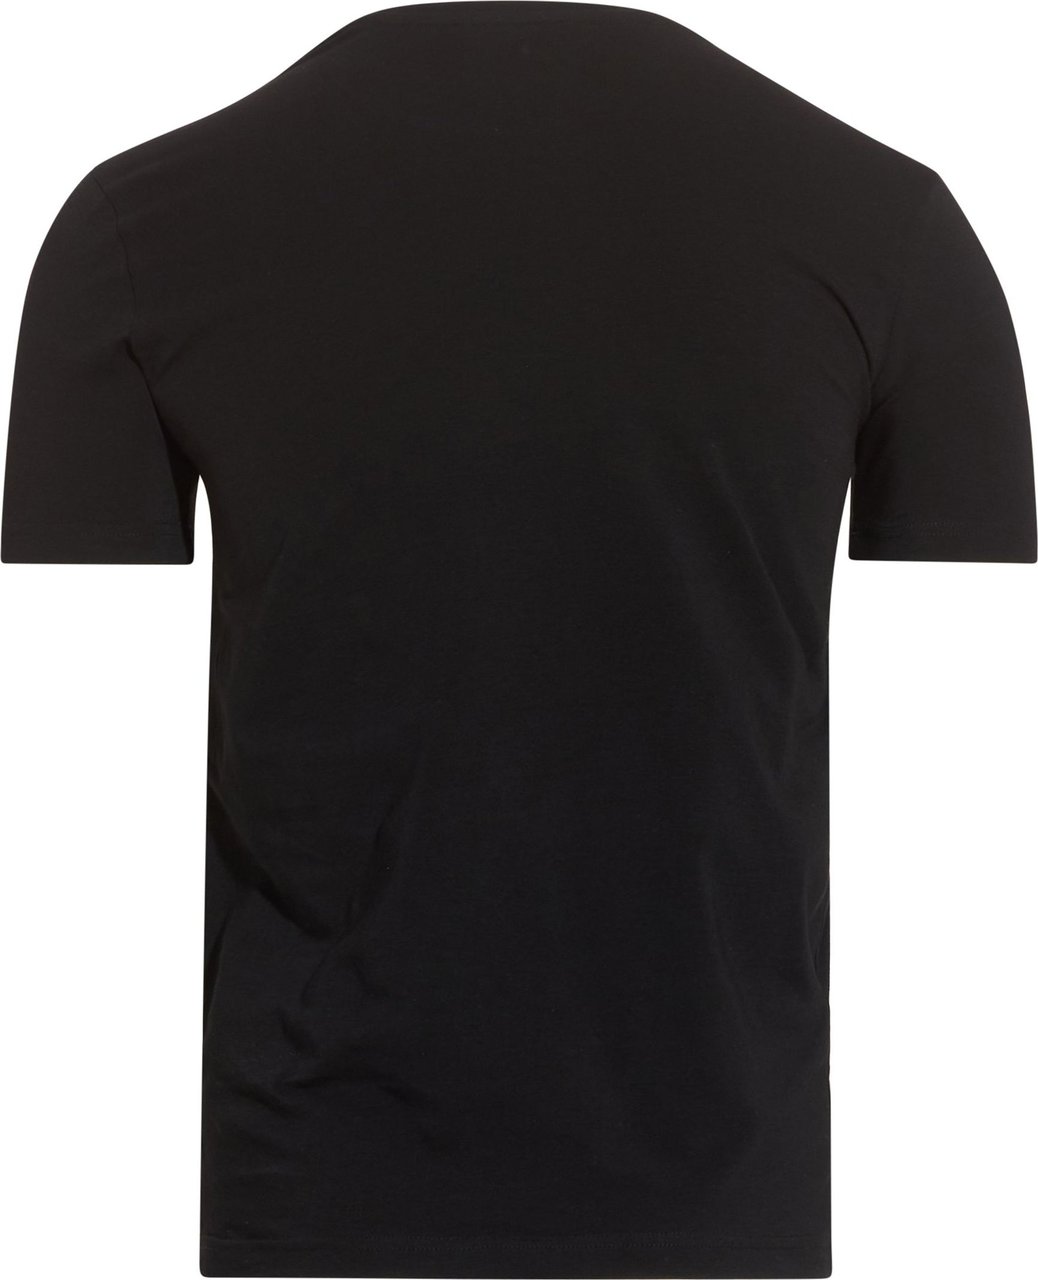 Iceberg Popeye Strong T-shirt Black Black